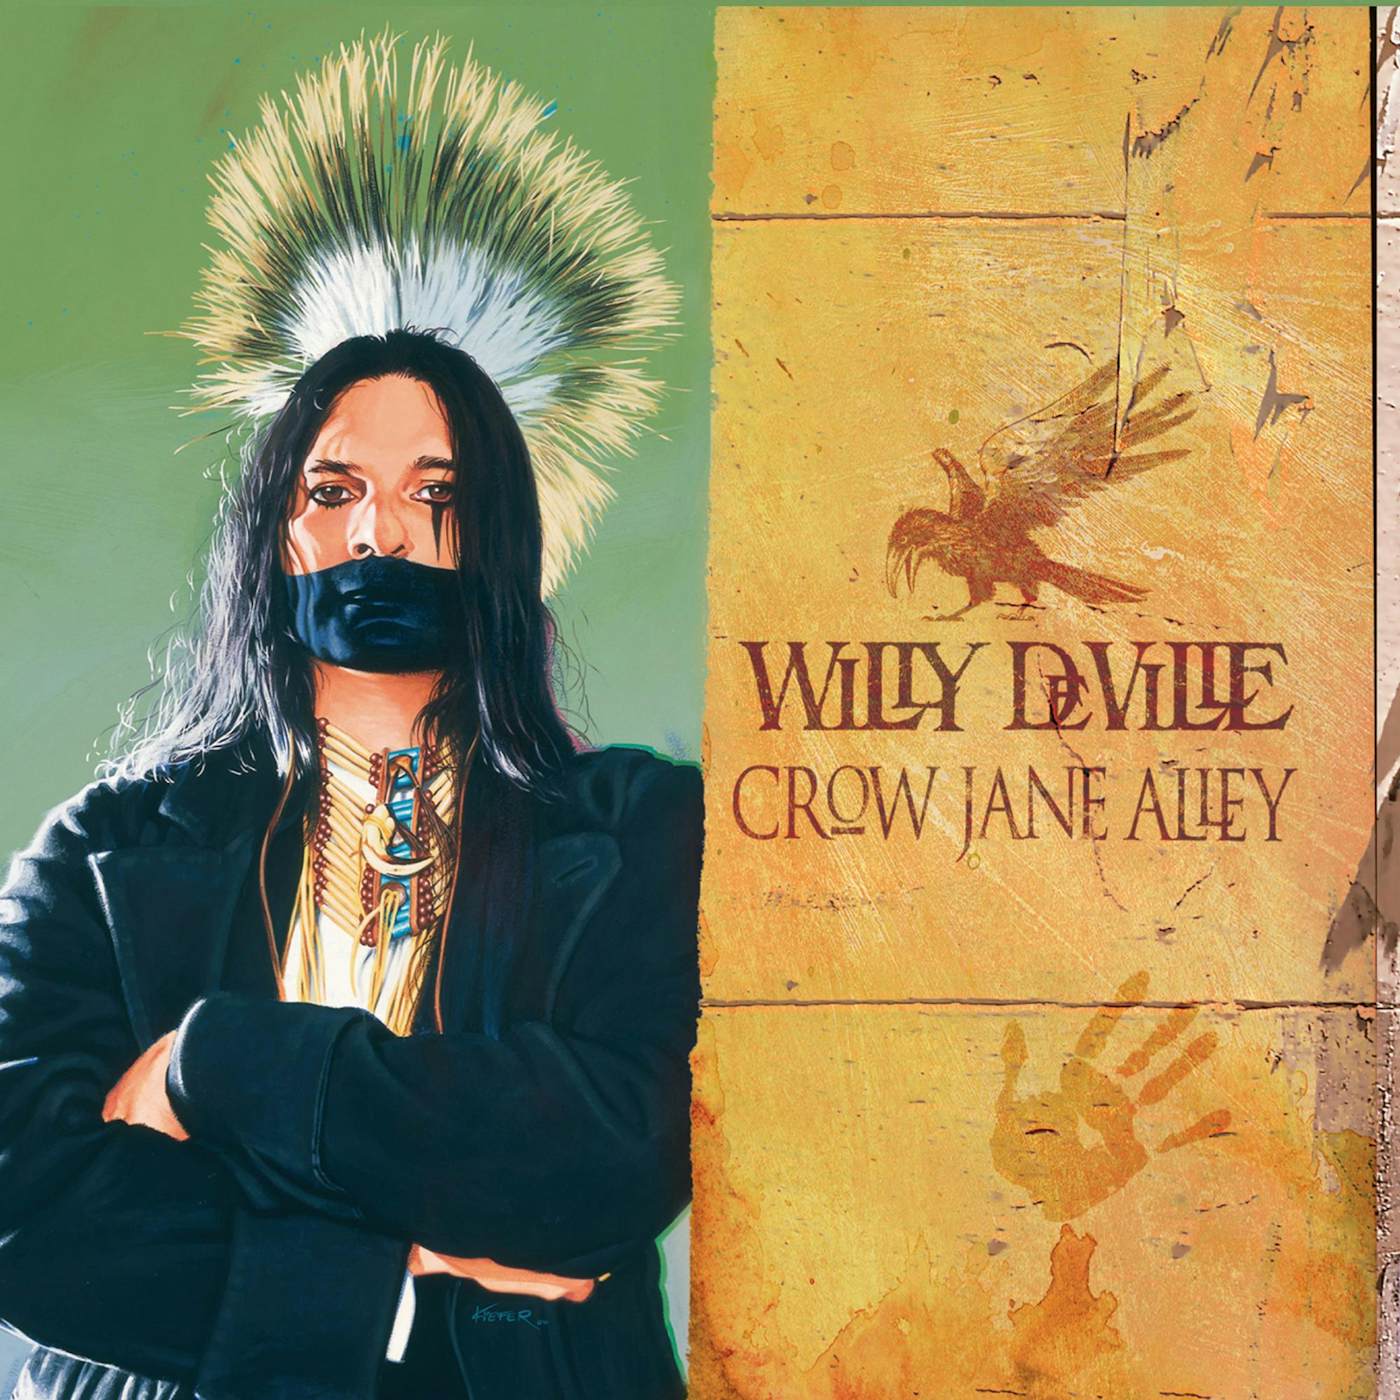 Willy DeVille Crow Jane Alley Vinyl Record